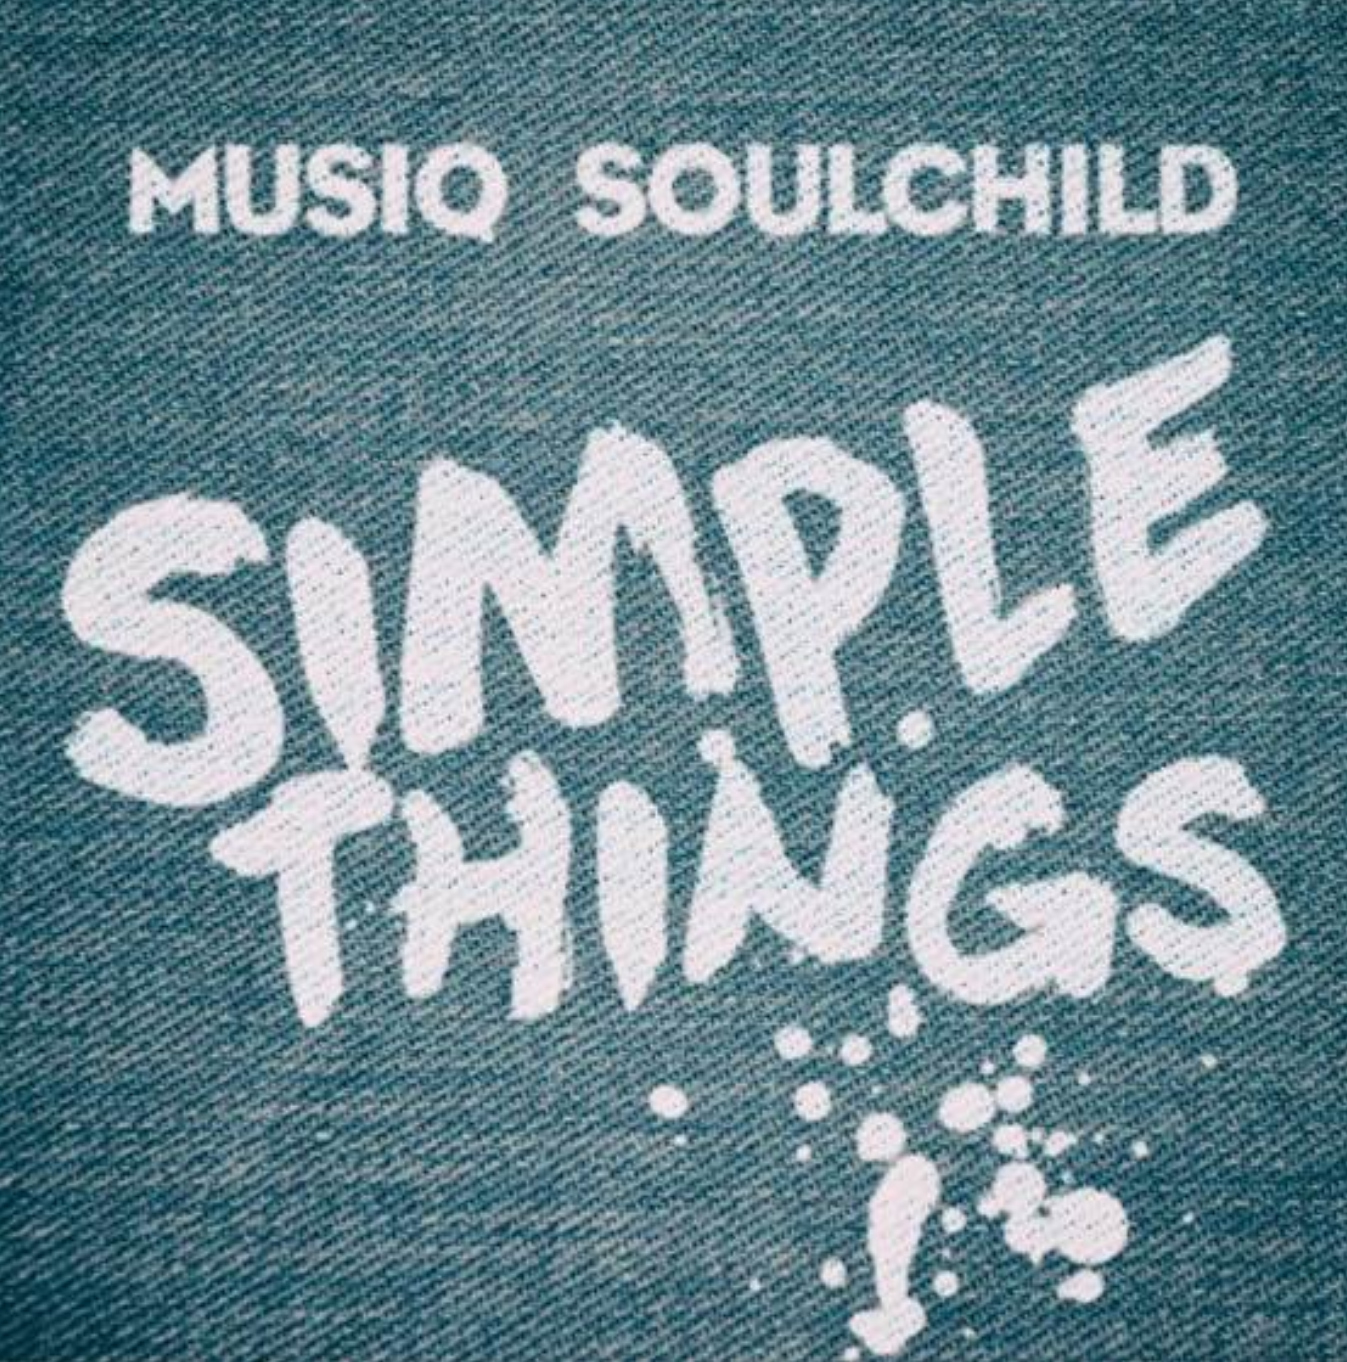 New Video: Musiq Soulchild - Simple Things